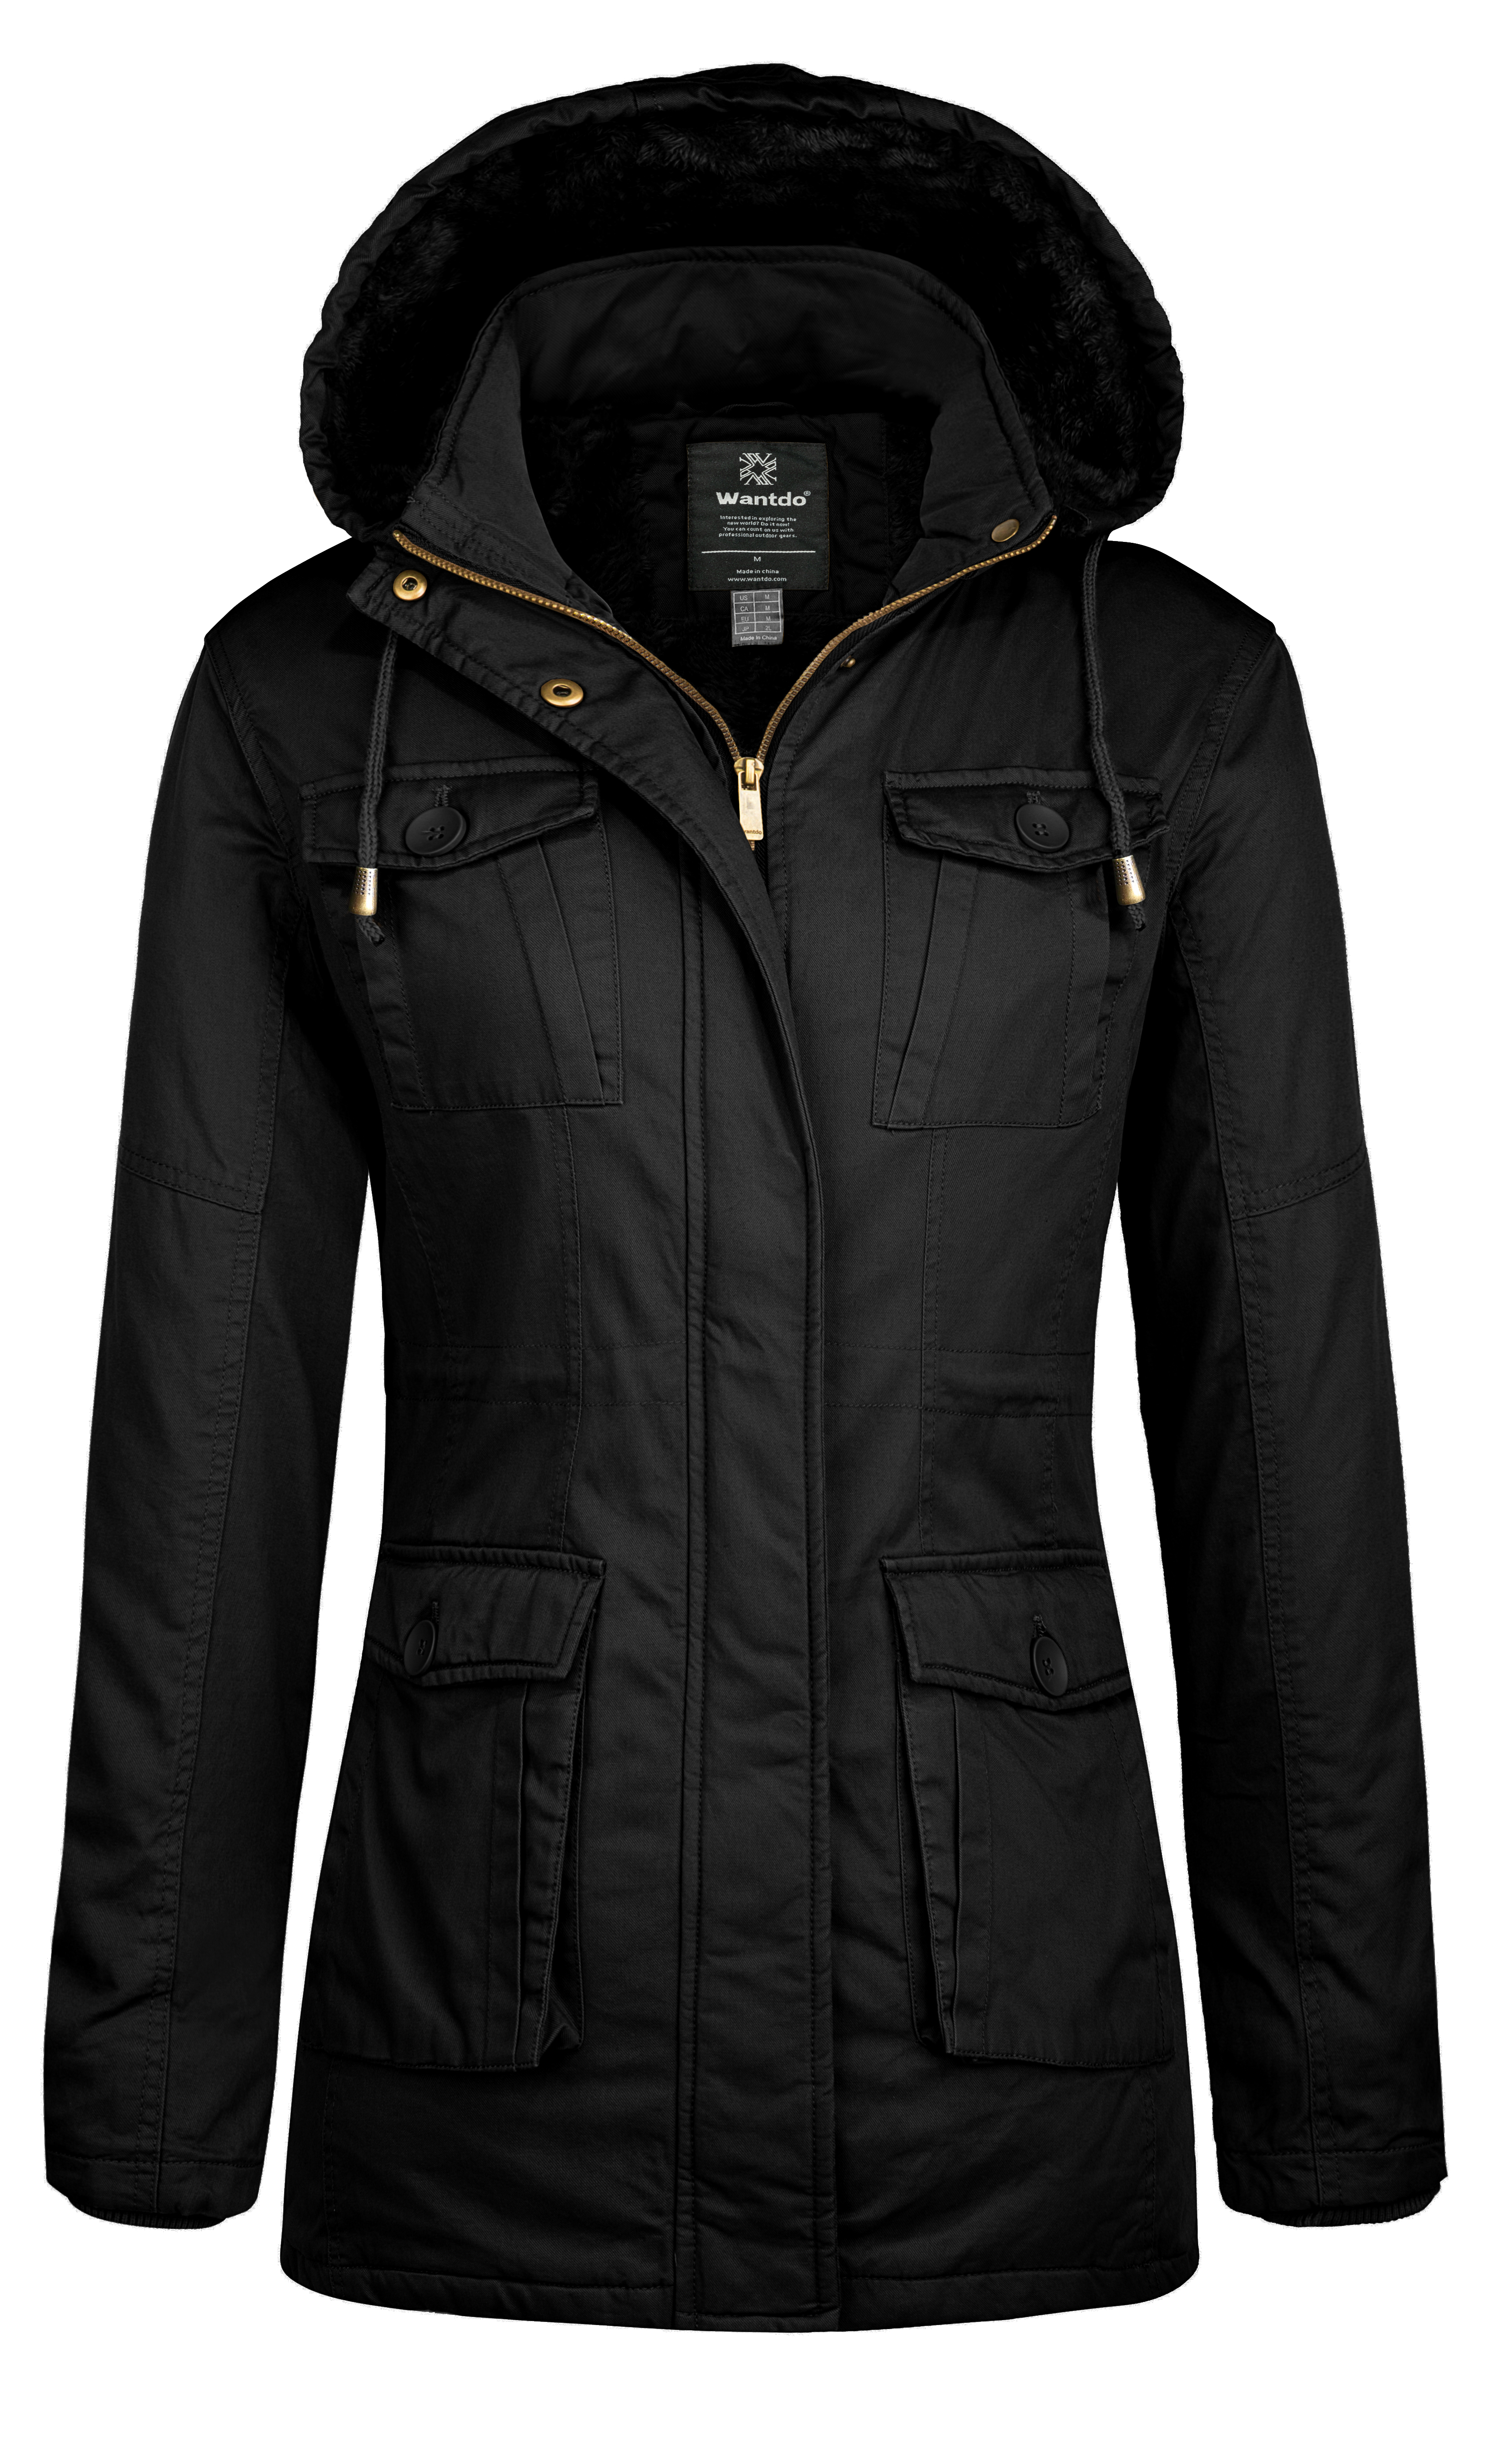 Wantdo Women's Winter Warm Coat Parka Jacket with Removable Hood Black Size S - image 1 of 6